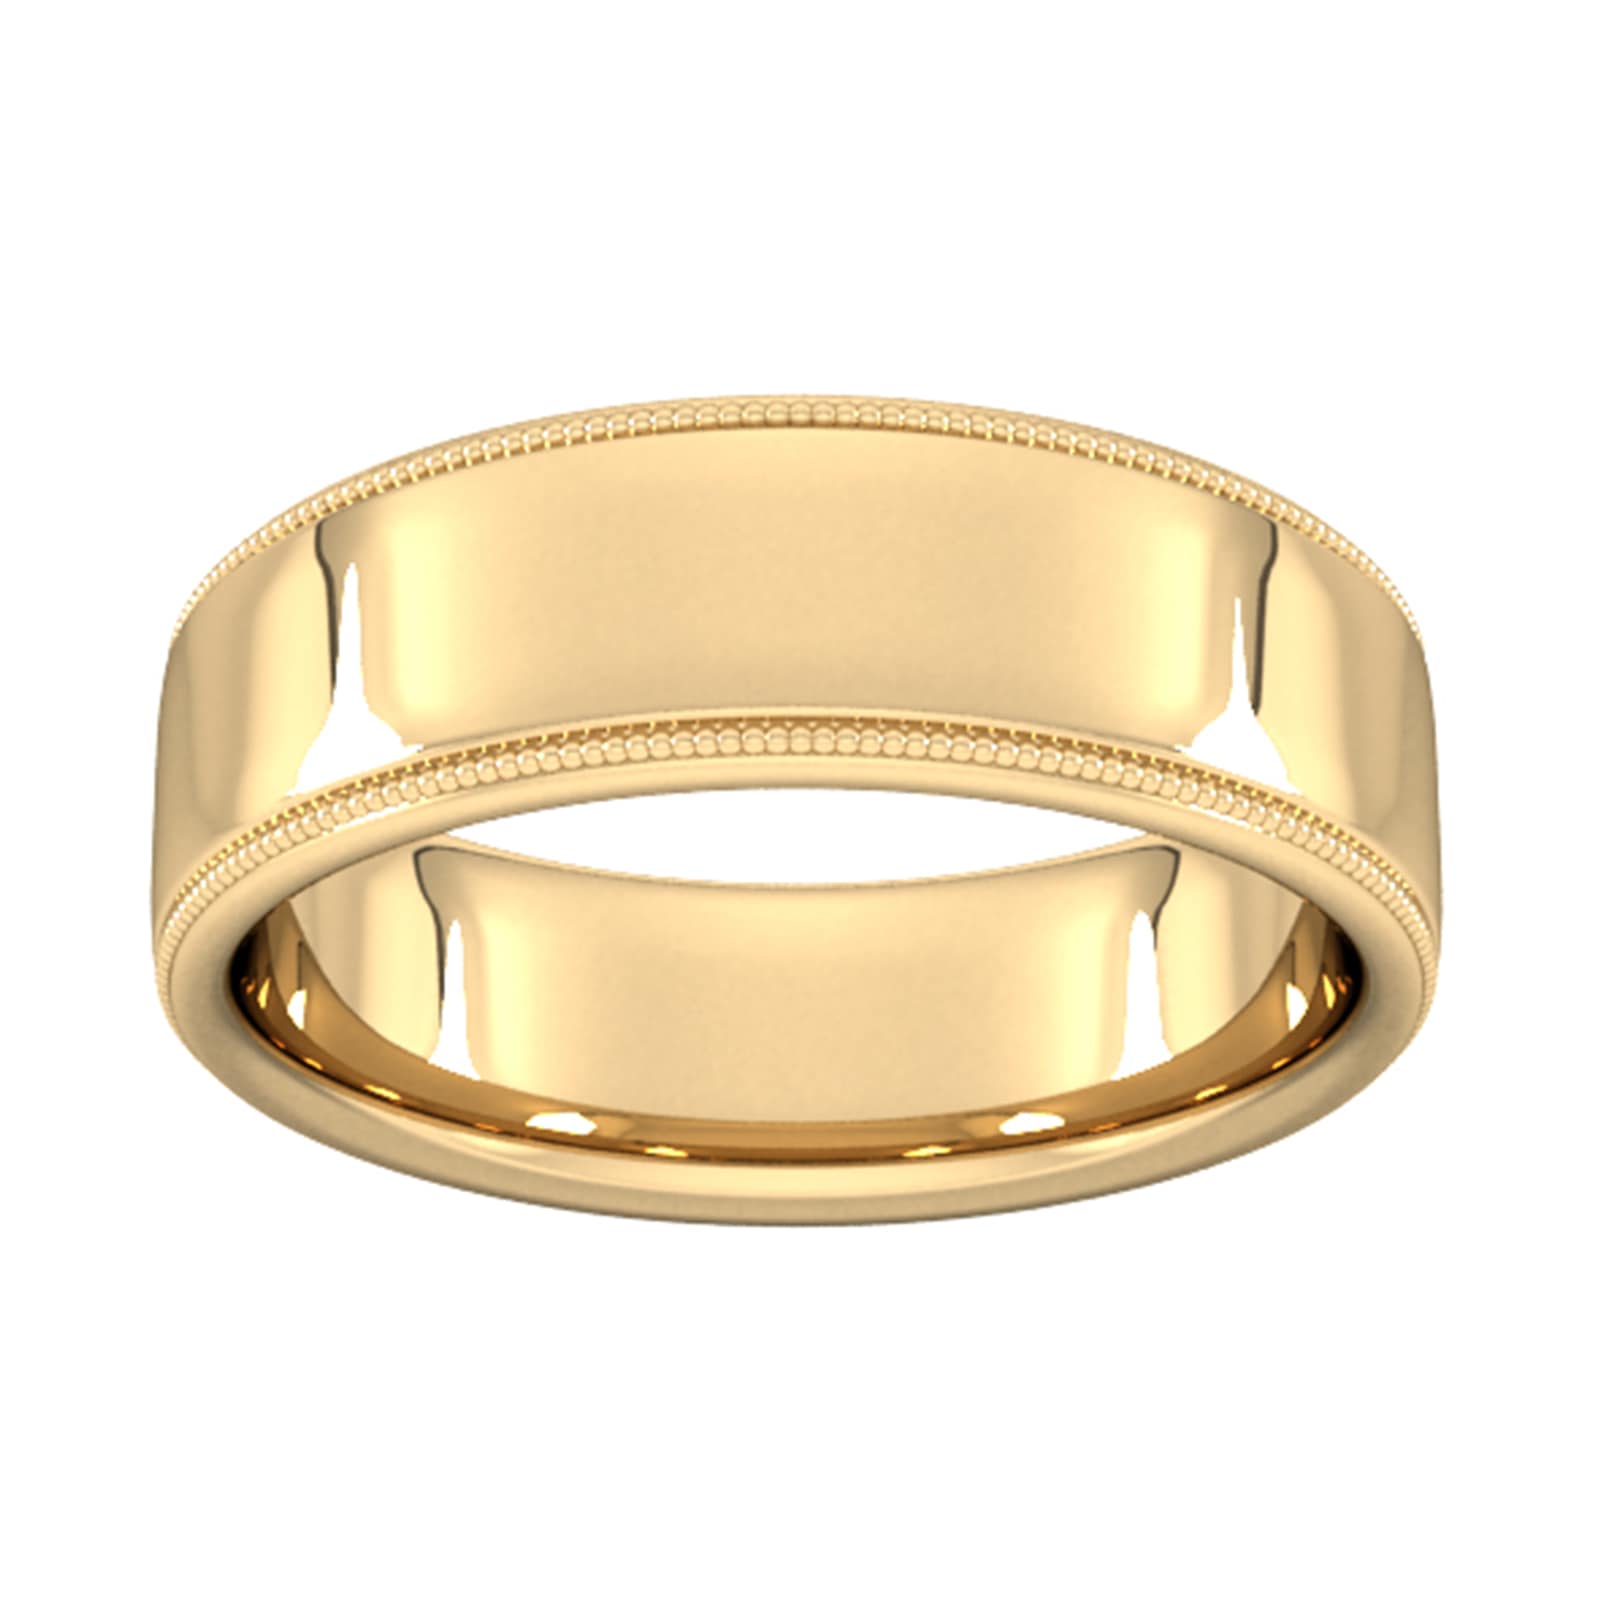 7mm Slight Court Standard Milgrain Edge Wedding Ring In 18 Carat Yellow Gold - Ring Size N